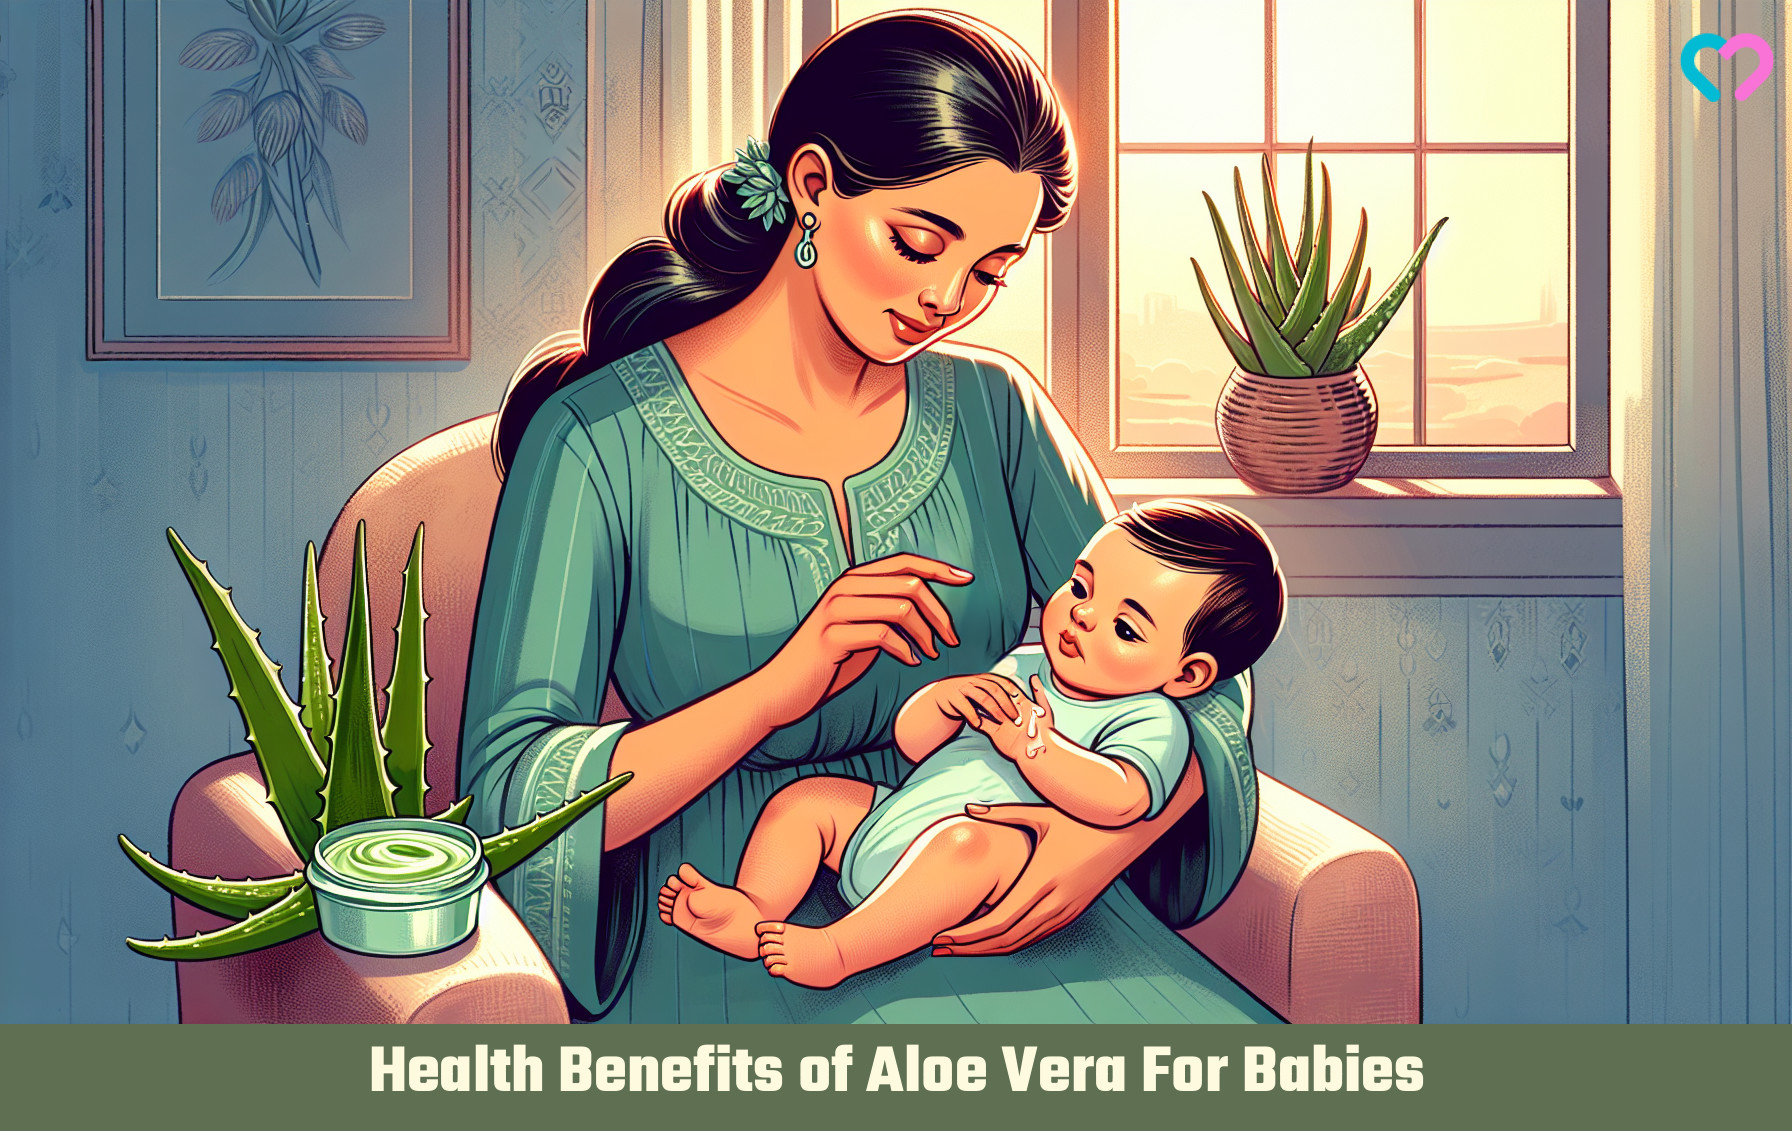 Aloe Vera For Babies_illustration